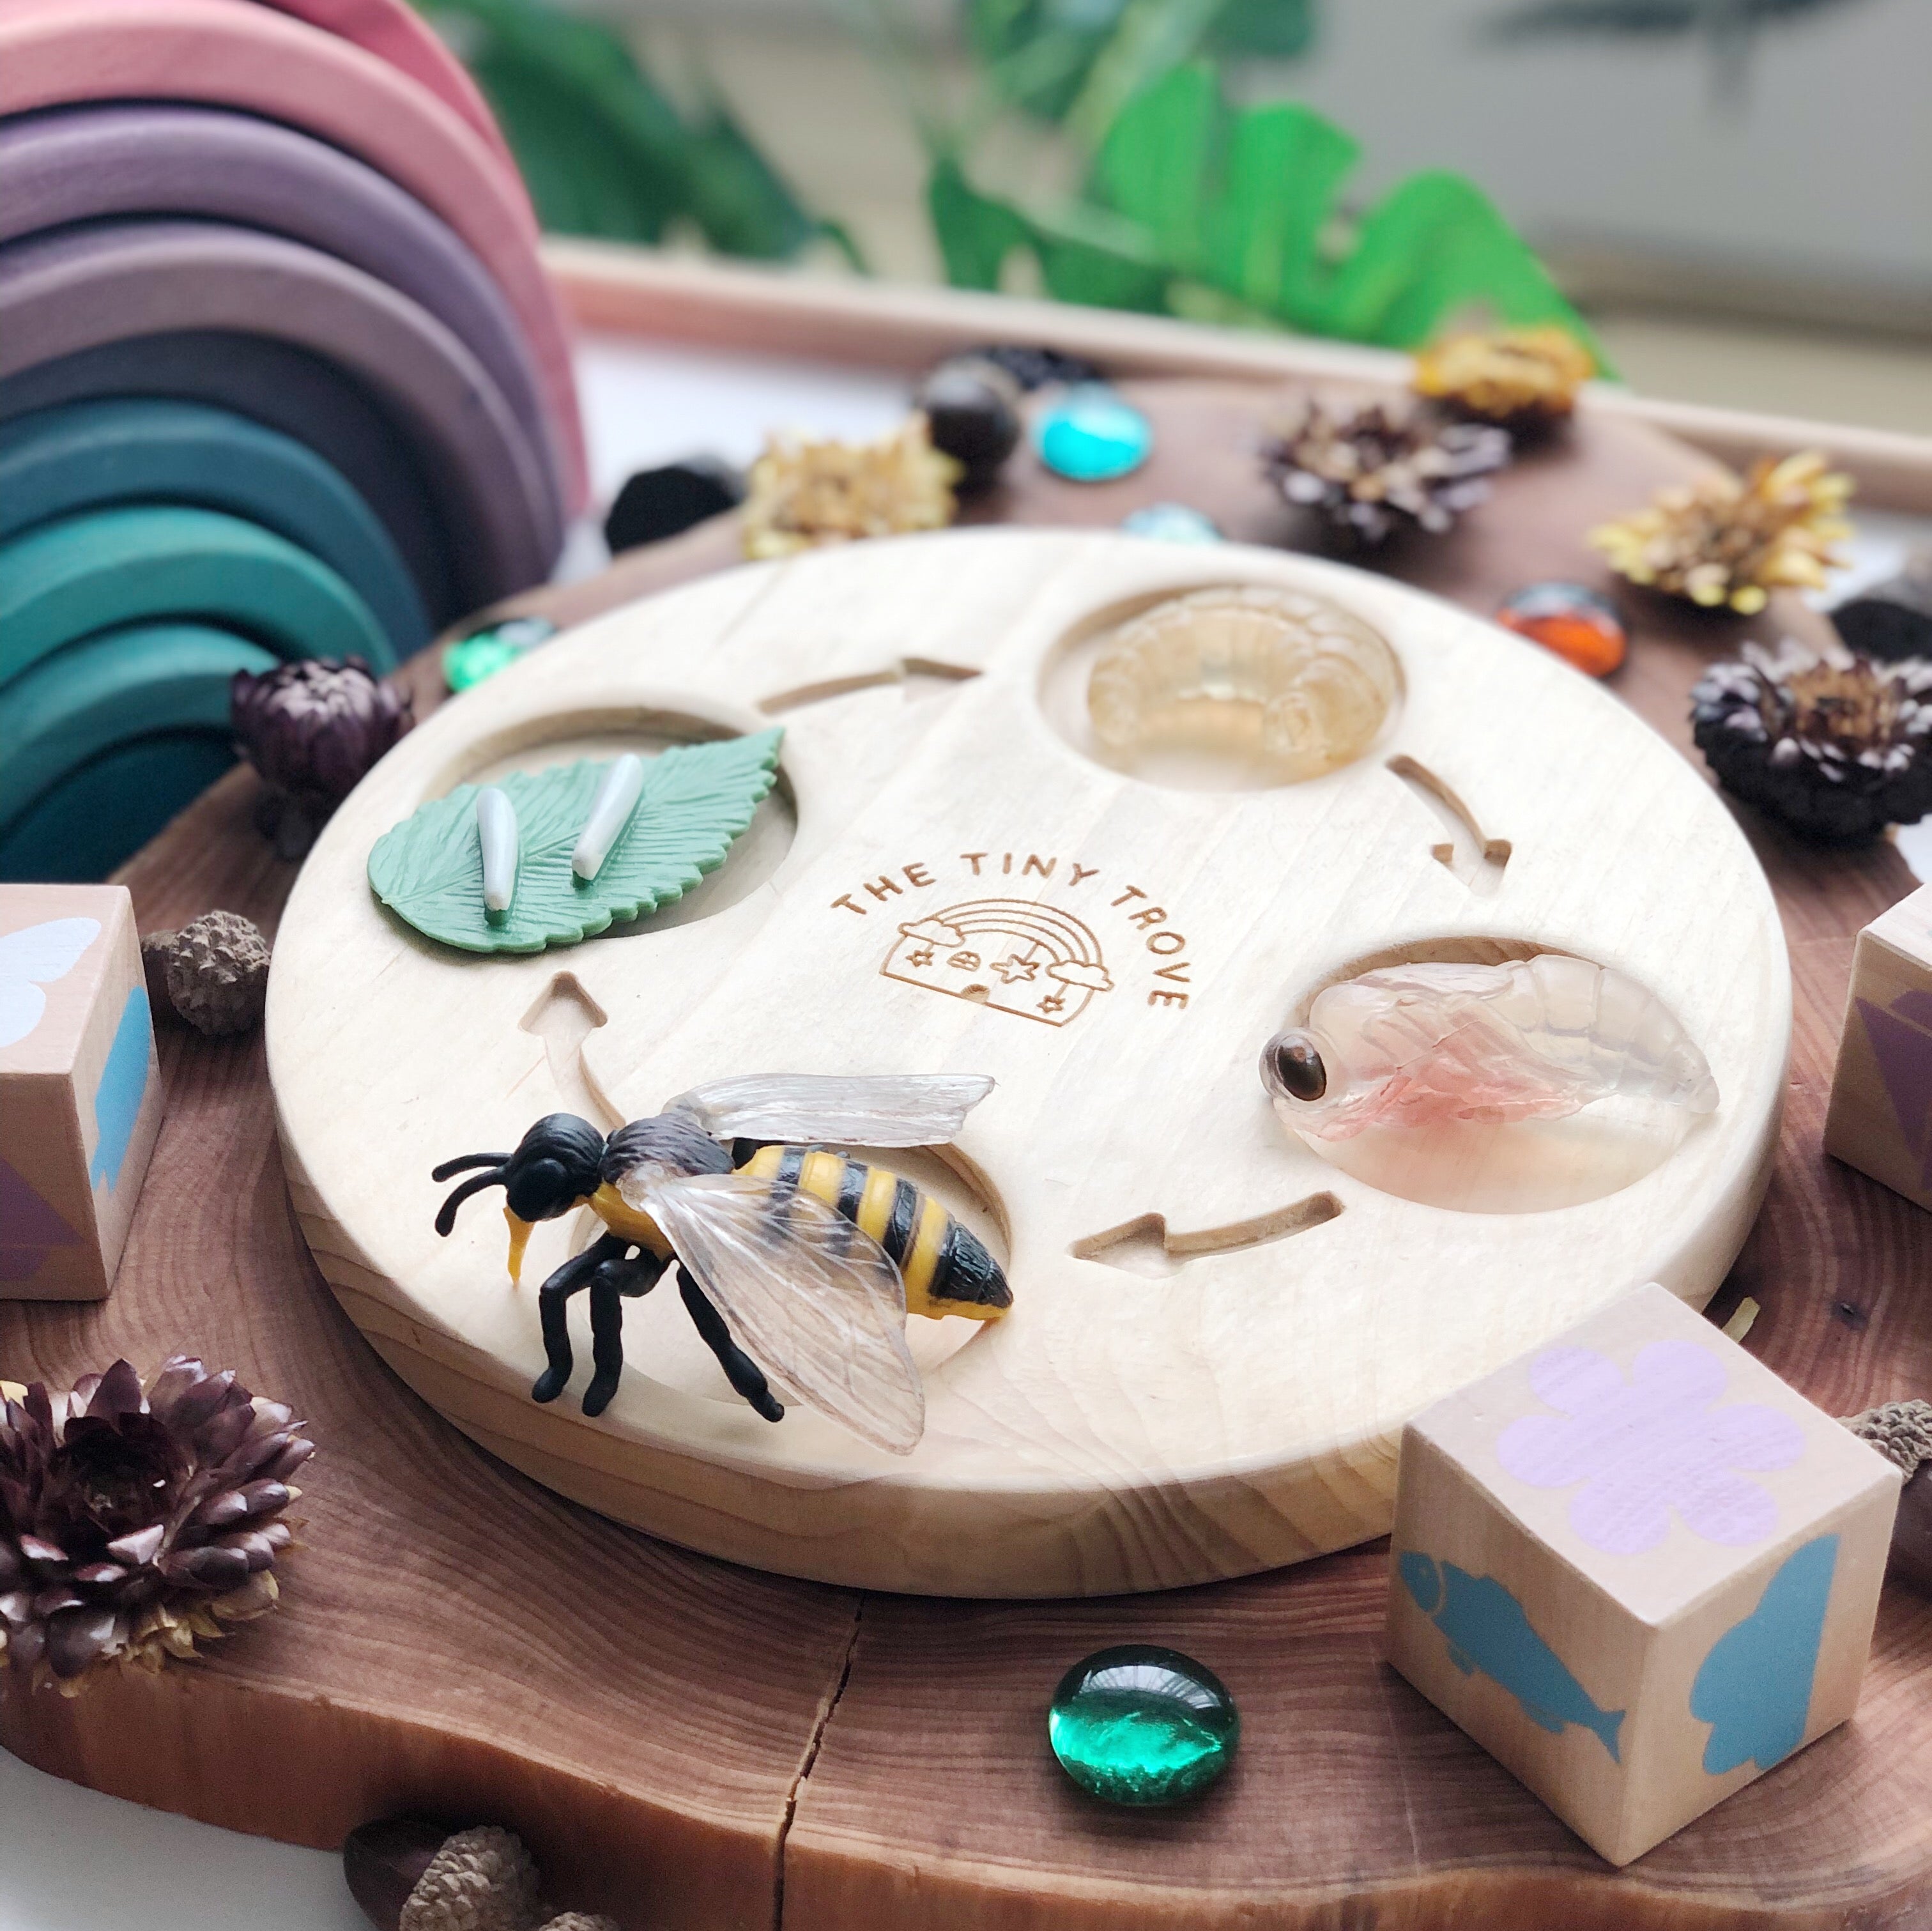 Life Cycle of a Bee Figurine Set